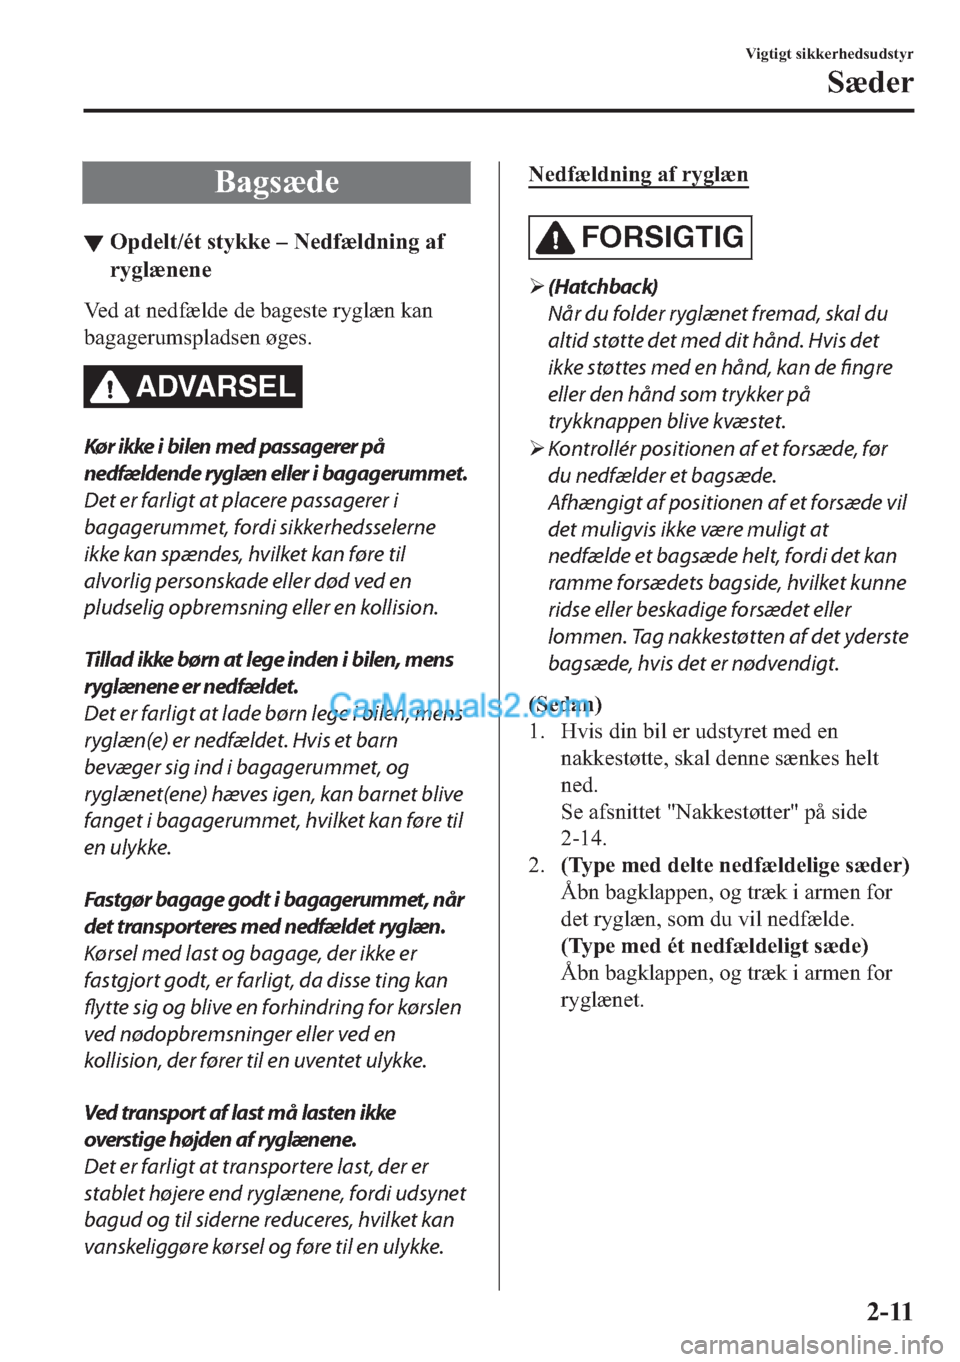 MAZDA MODEL 2 2019  Instruktionsbog (in Danish) �%�D�J�V� �G�H
▼�2�S�G�H�O�W��p�W��V�W�\�N�N�H��